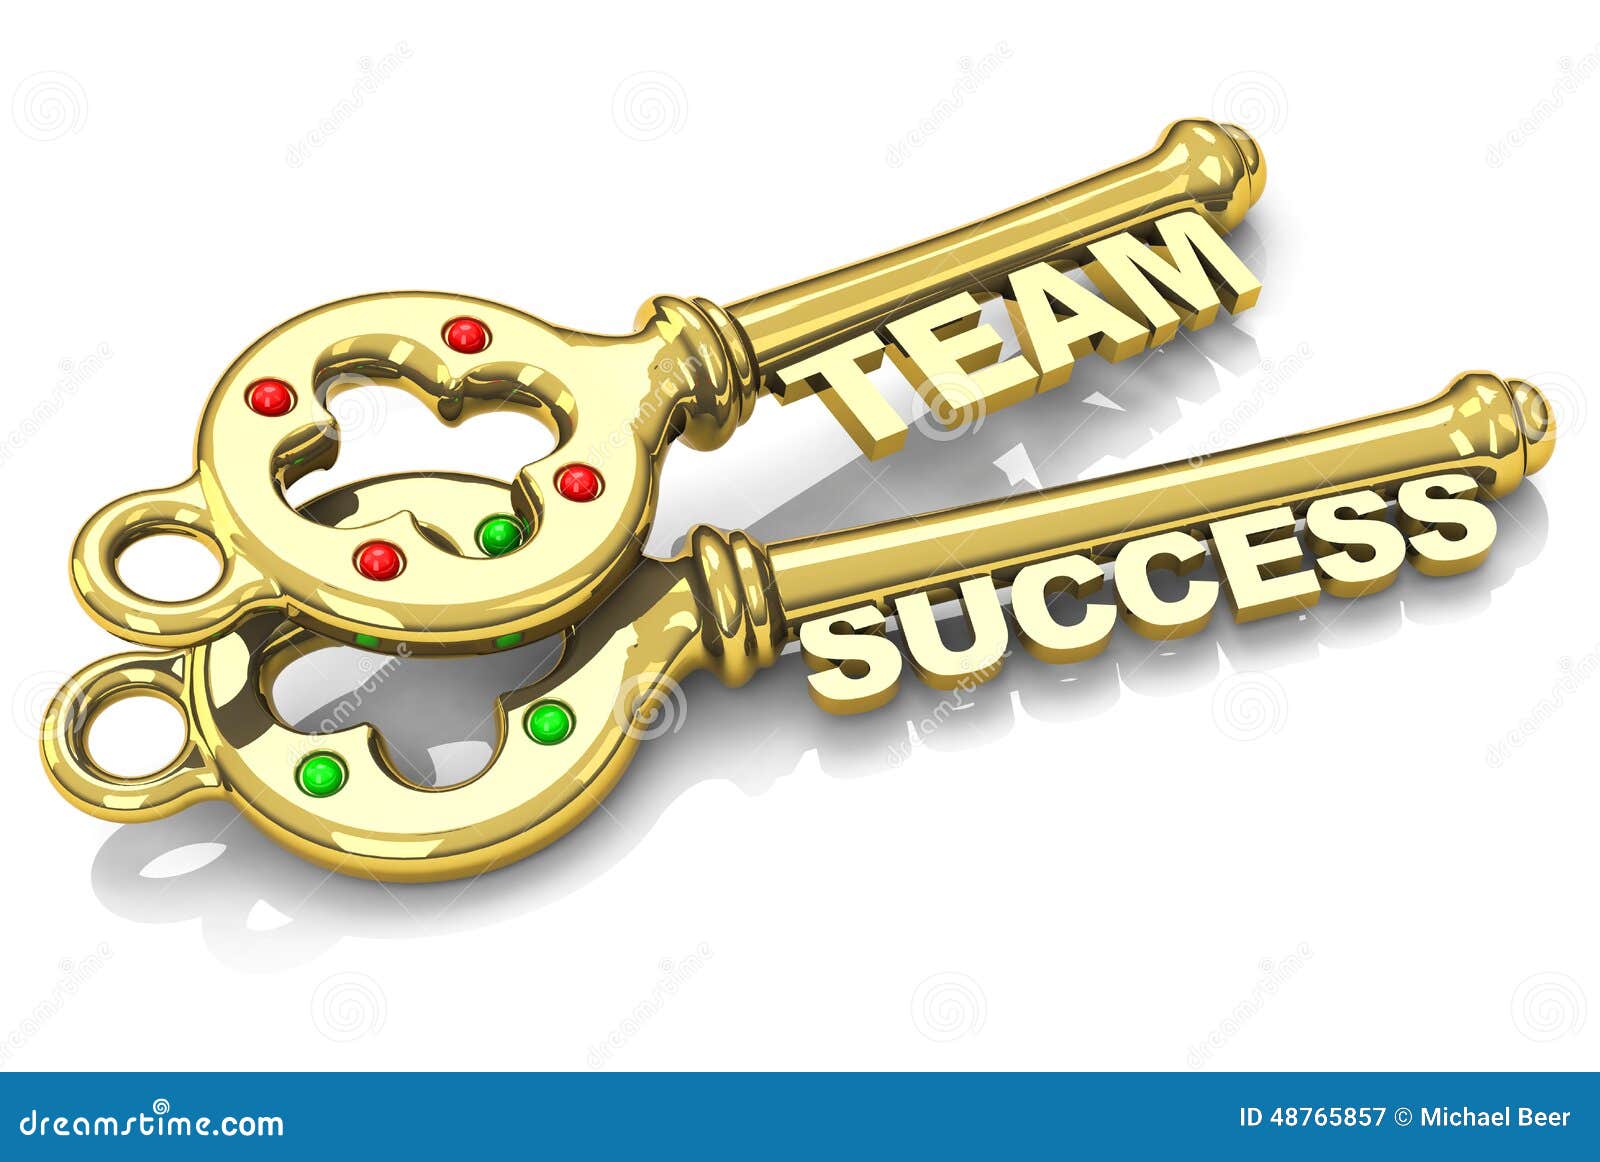 keys to success clipart - photo #11